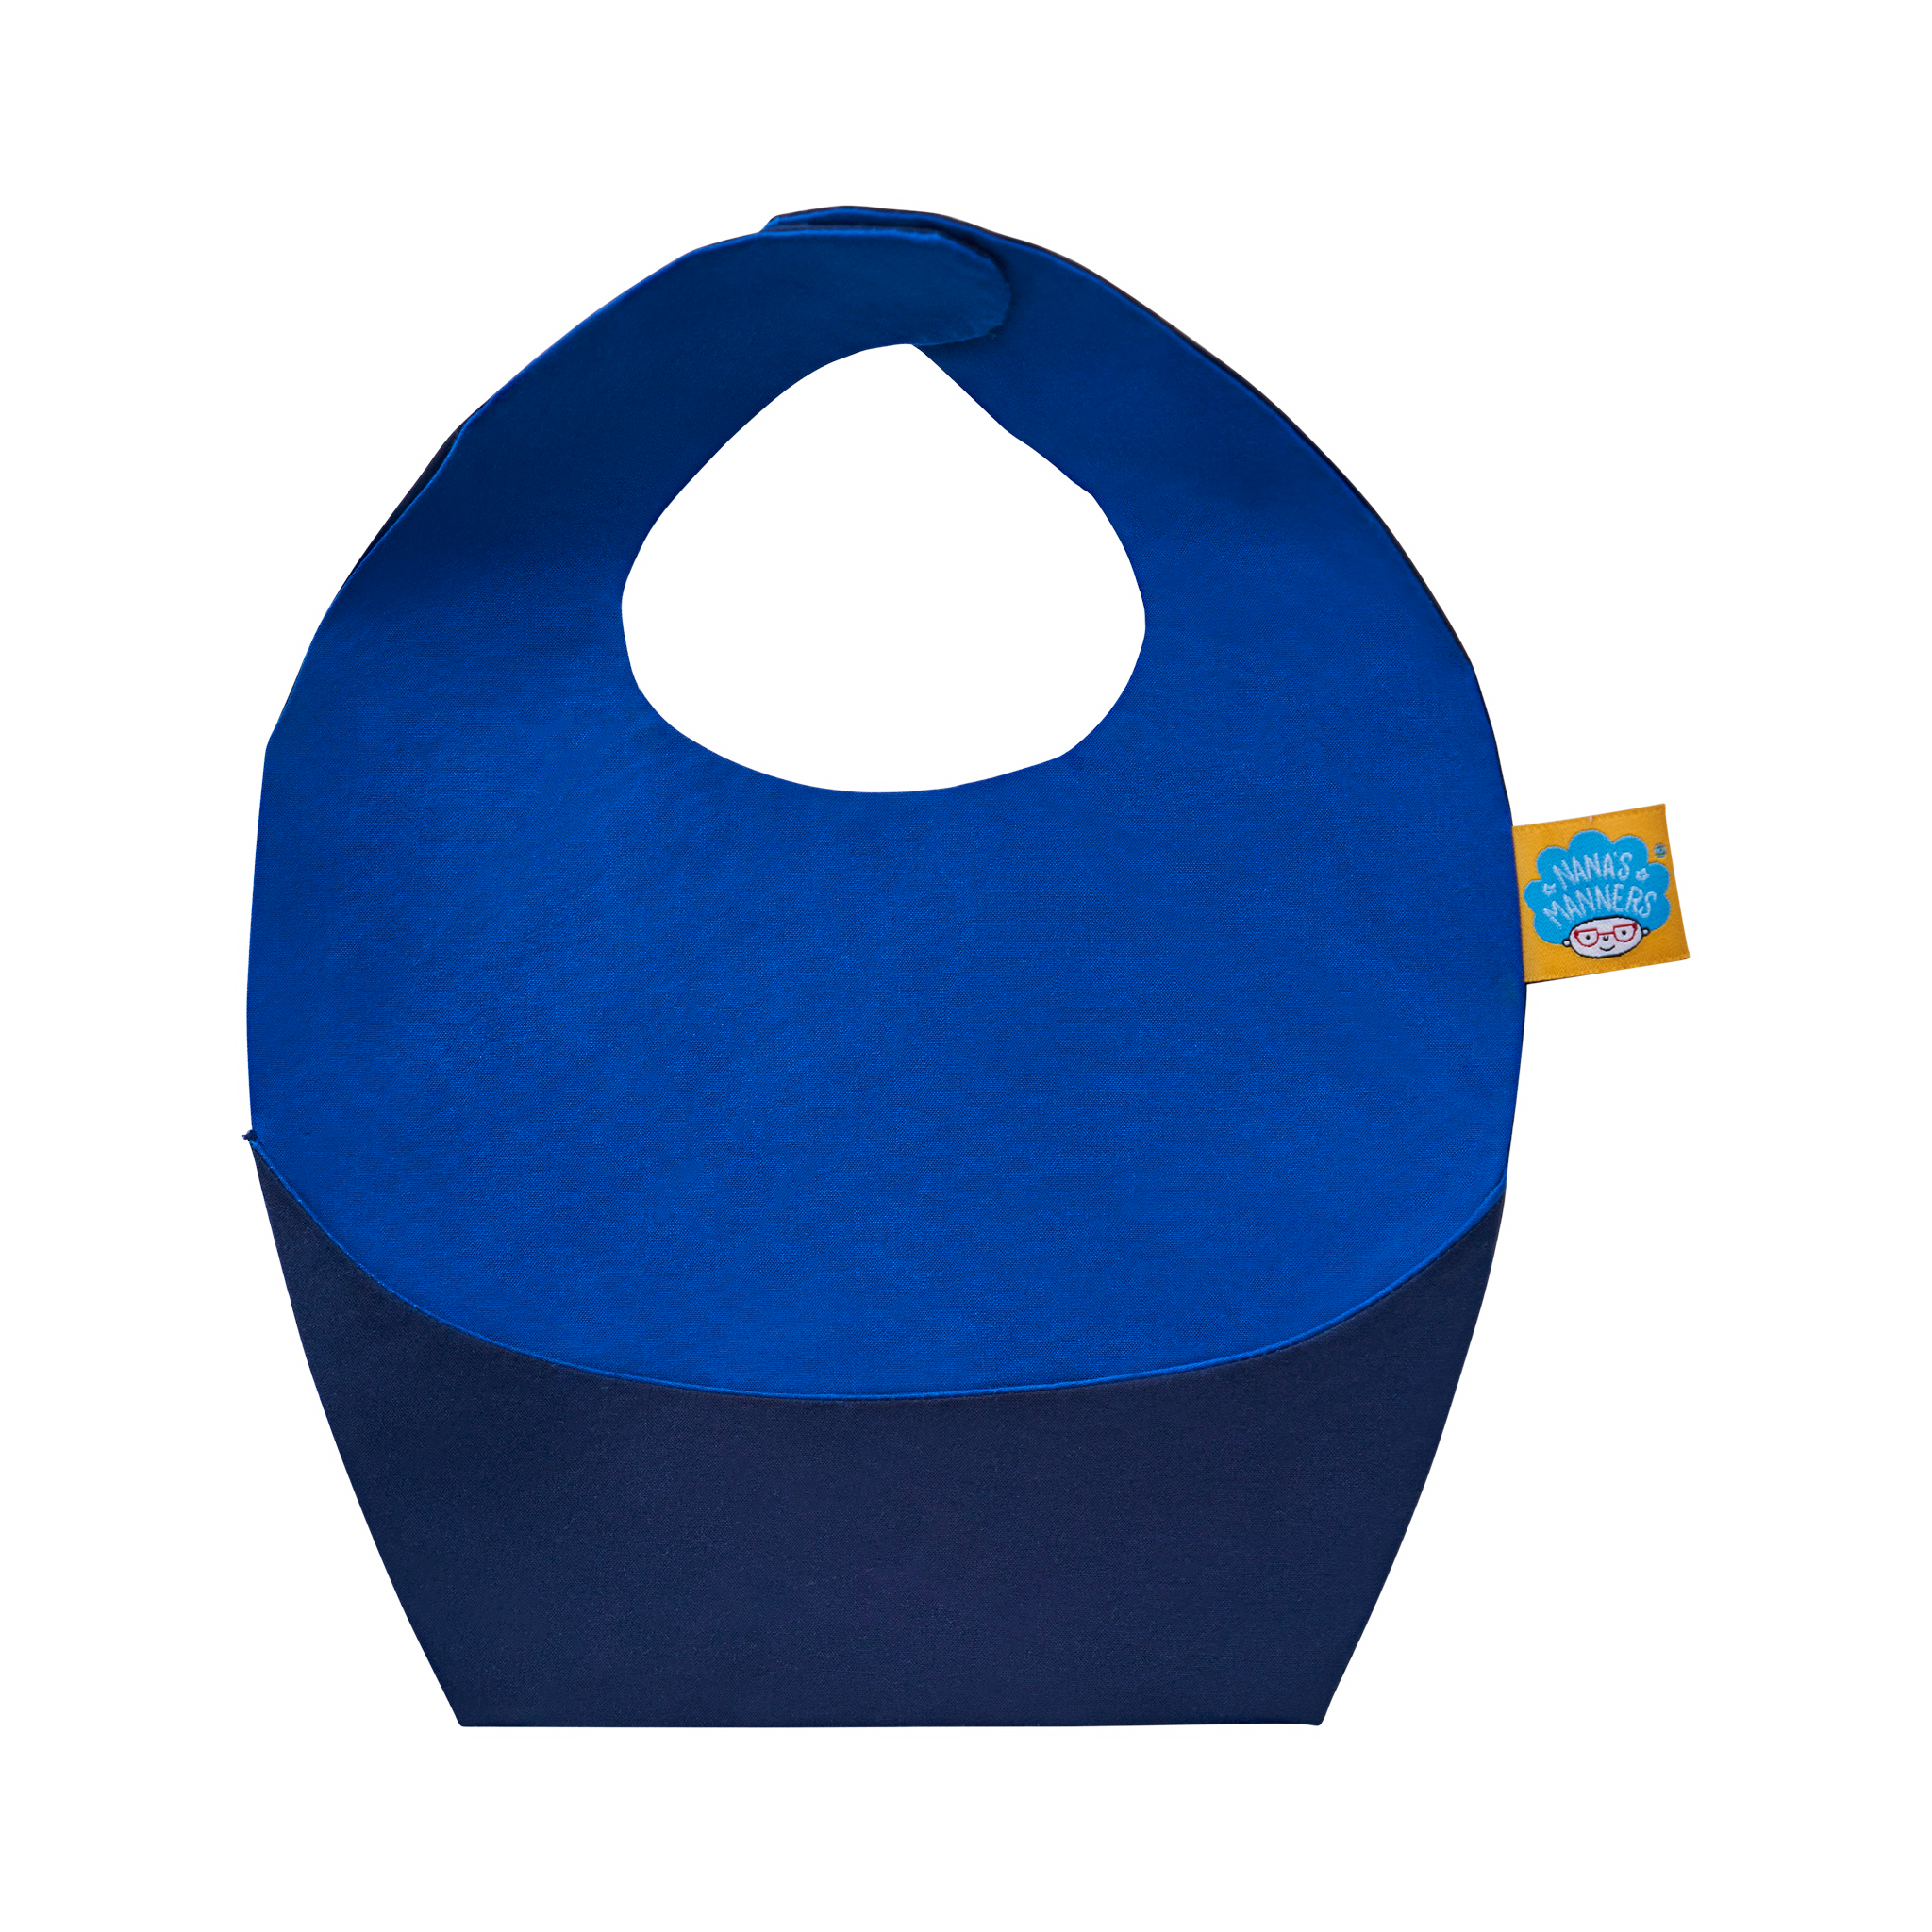 Nana's Original Waxed Cotton Bib for Babies & Toddlers - Reversible Royal Blue & Navy Blue